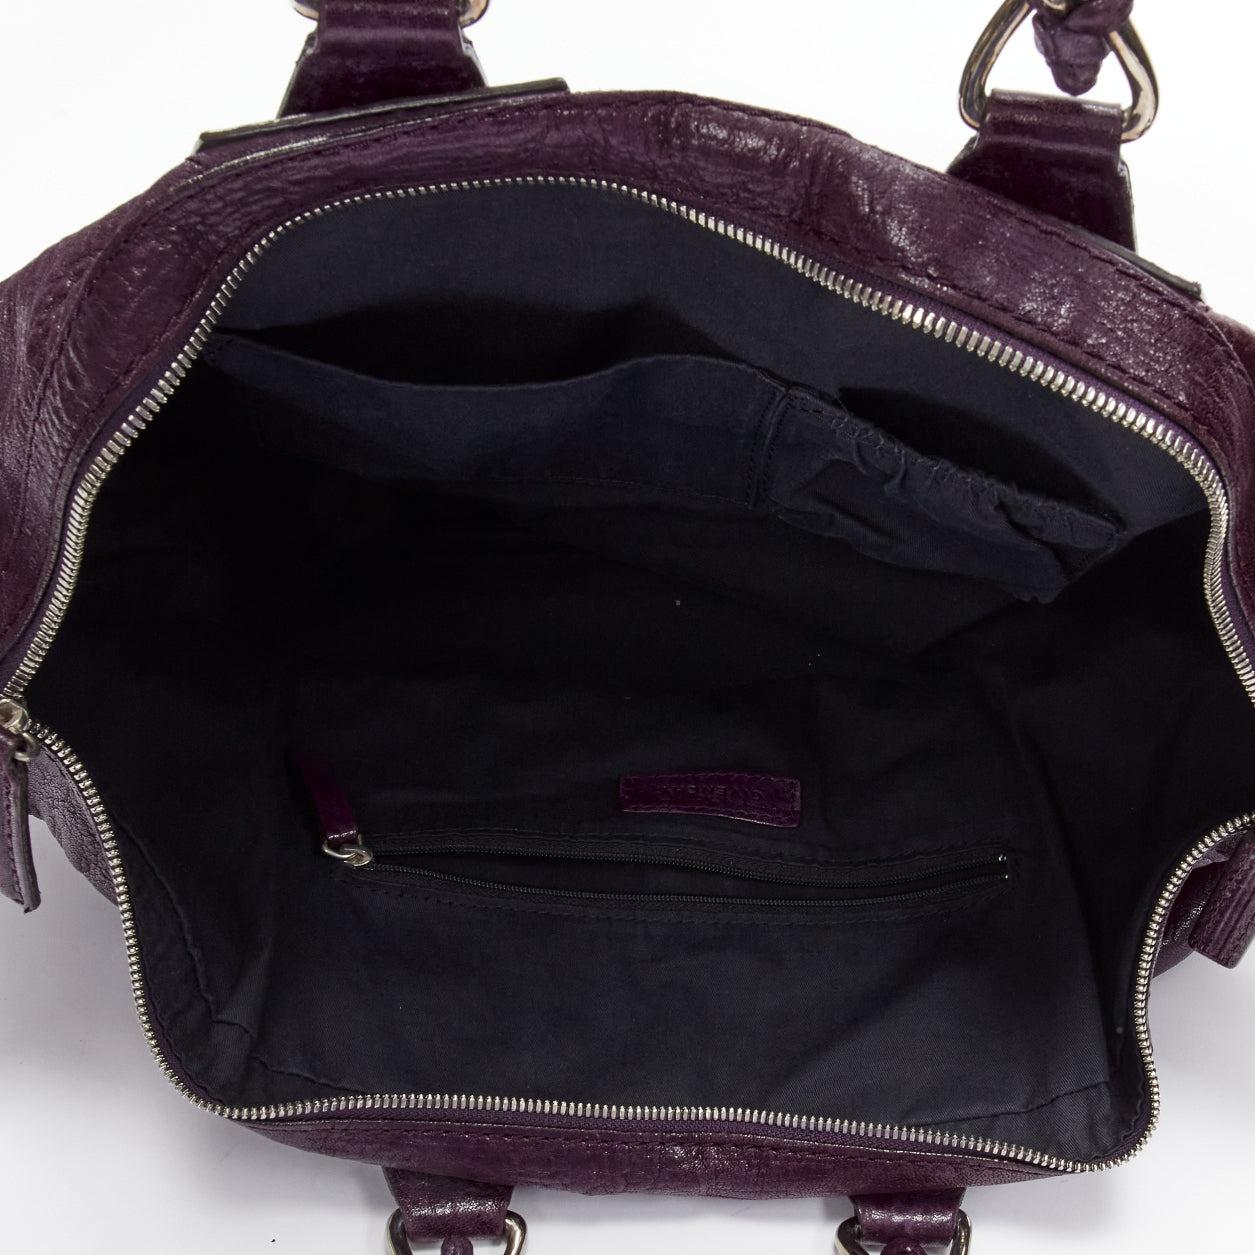 GIVENCHY Nightingale dark purple leather SHW top handle satchel bag 5